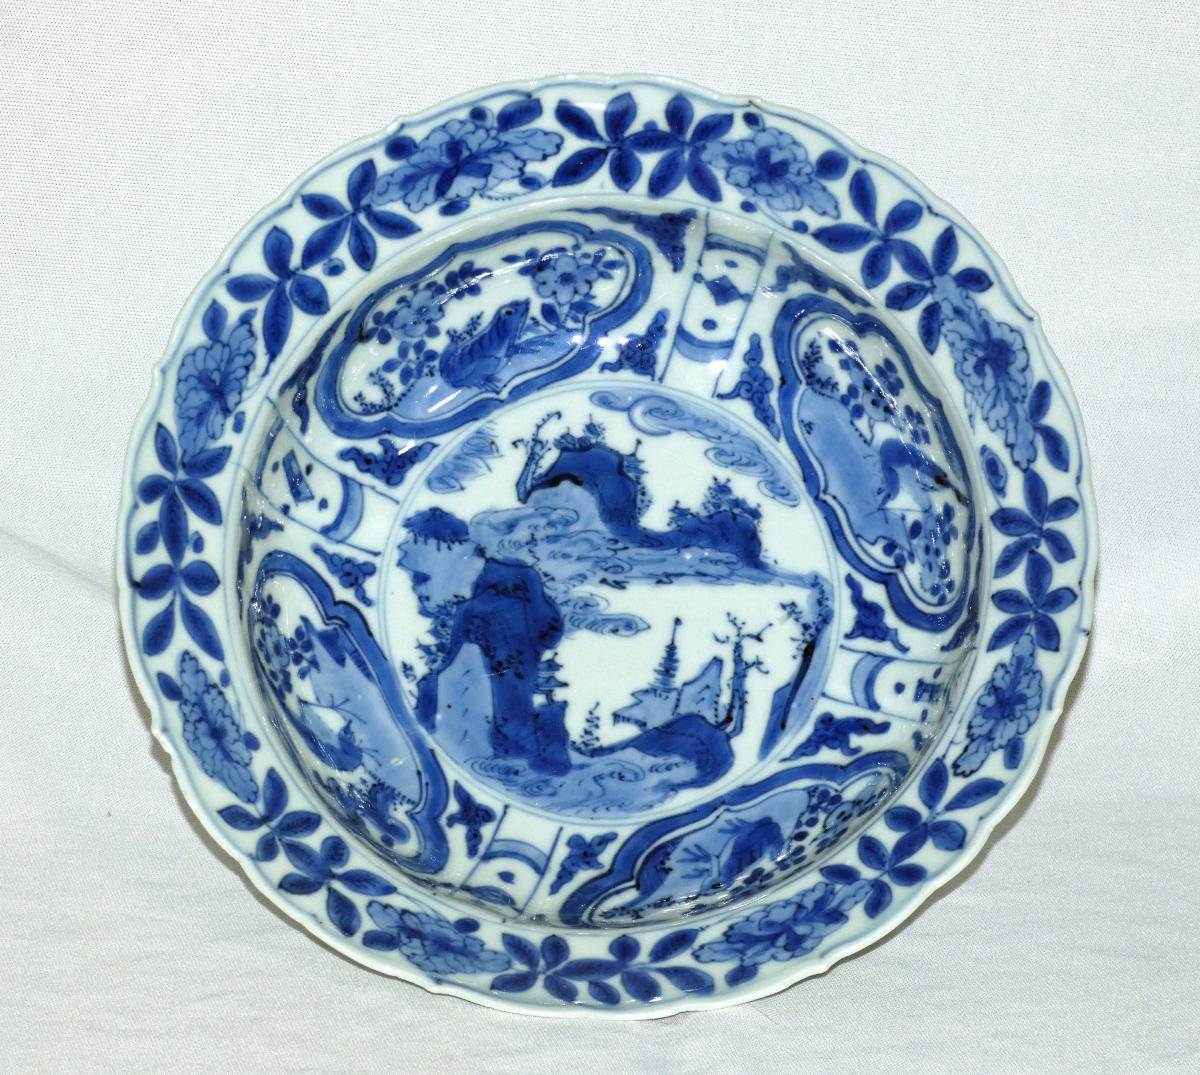 Ming Porcelain Kraak Klapmuts Bowl